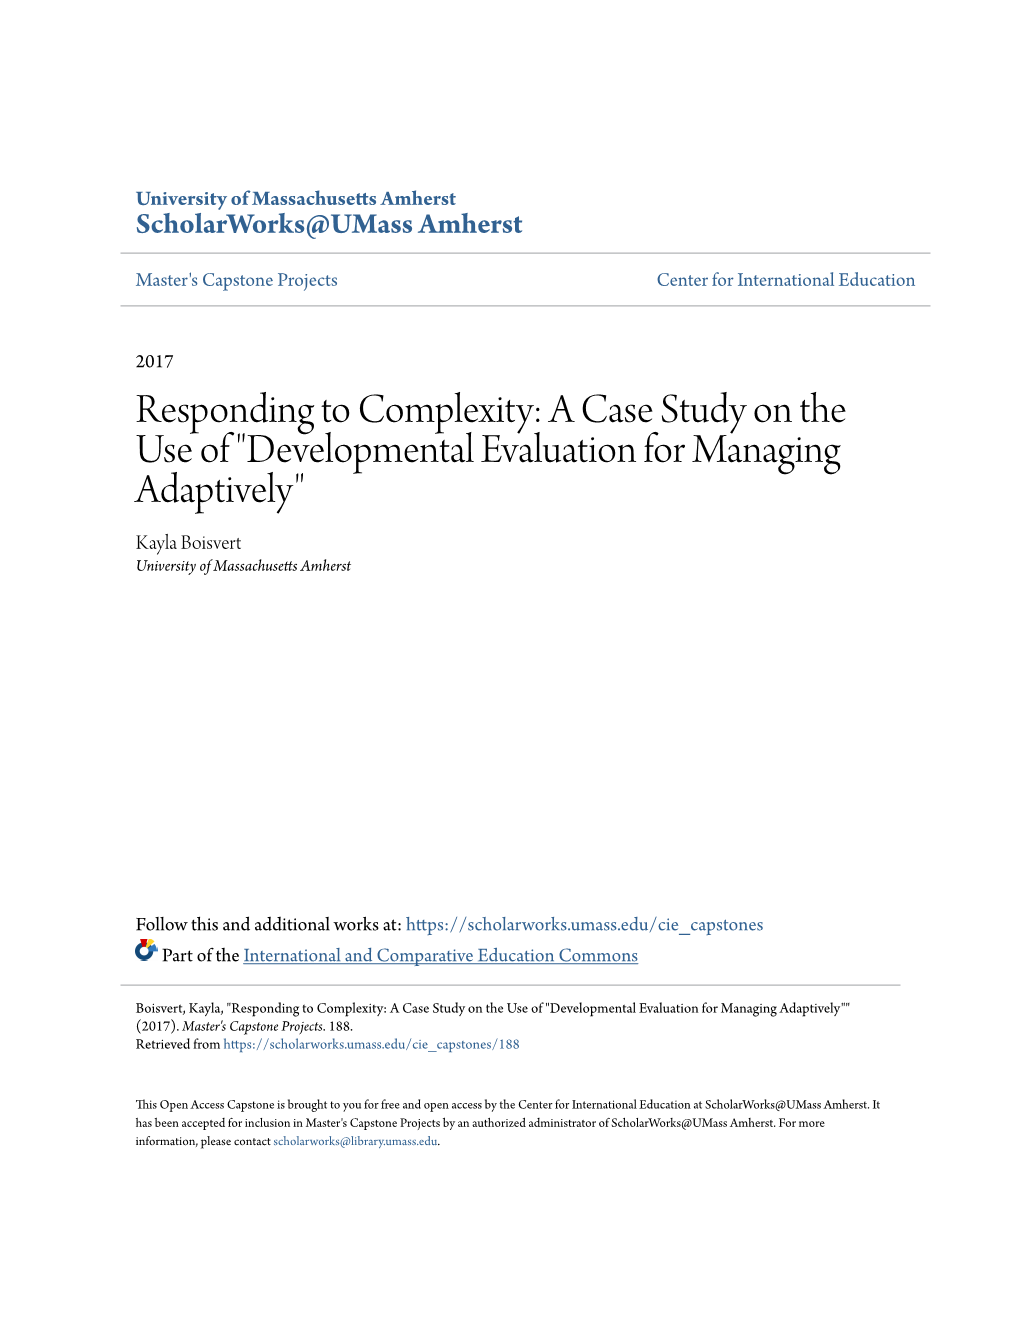 Developmental Evaluation for Managing Adaptively" Kayla Boisvert University of Massachusetts Amherst